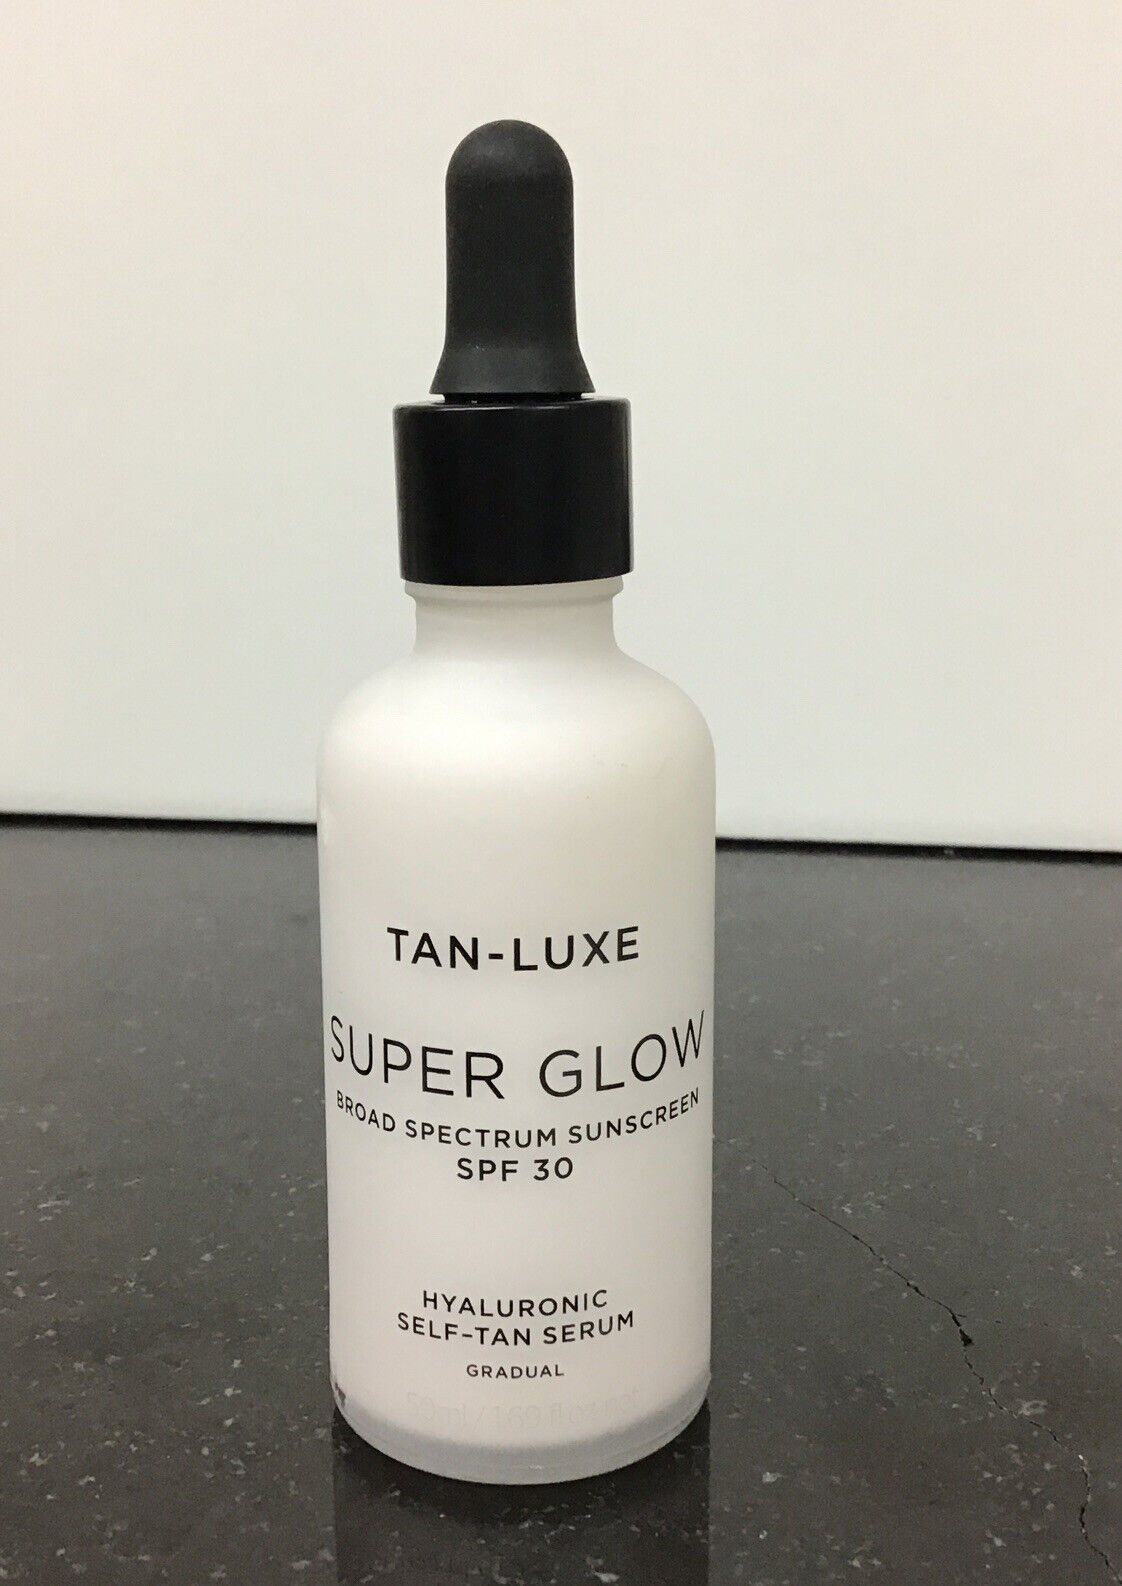 TAN LUXE Super glow broad spectrum sunscreen SPF 30 1.69 oz/ 50 ml.